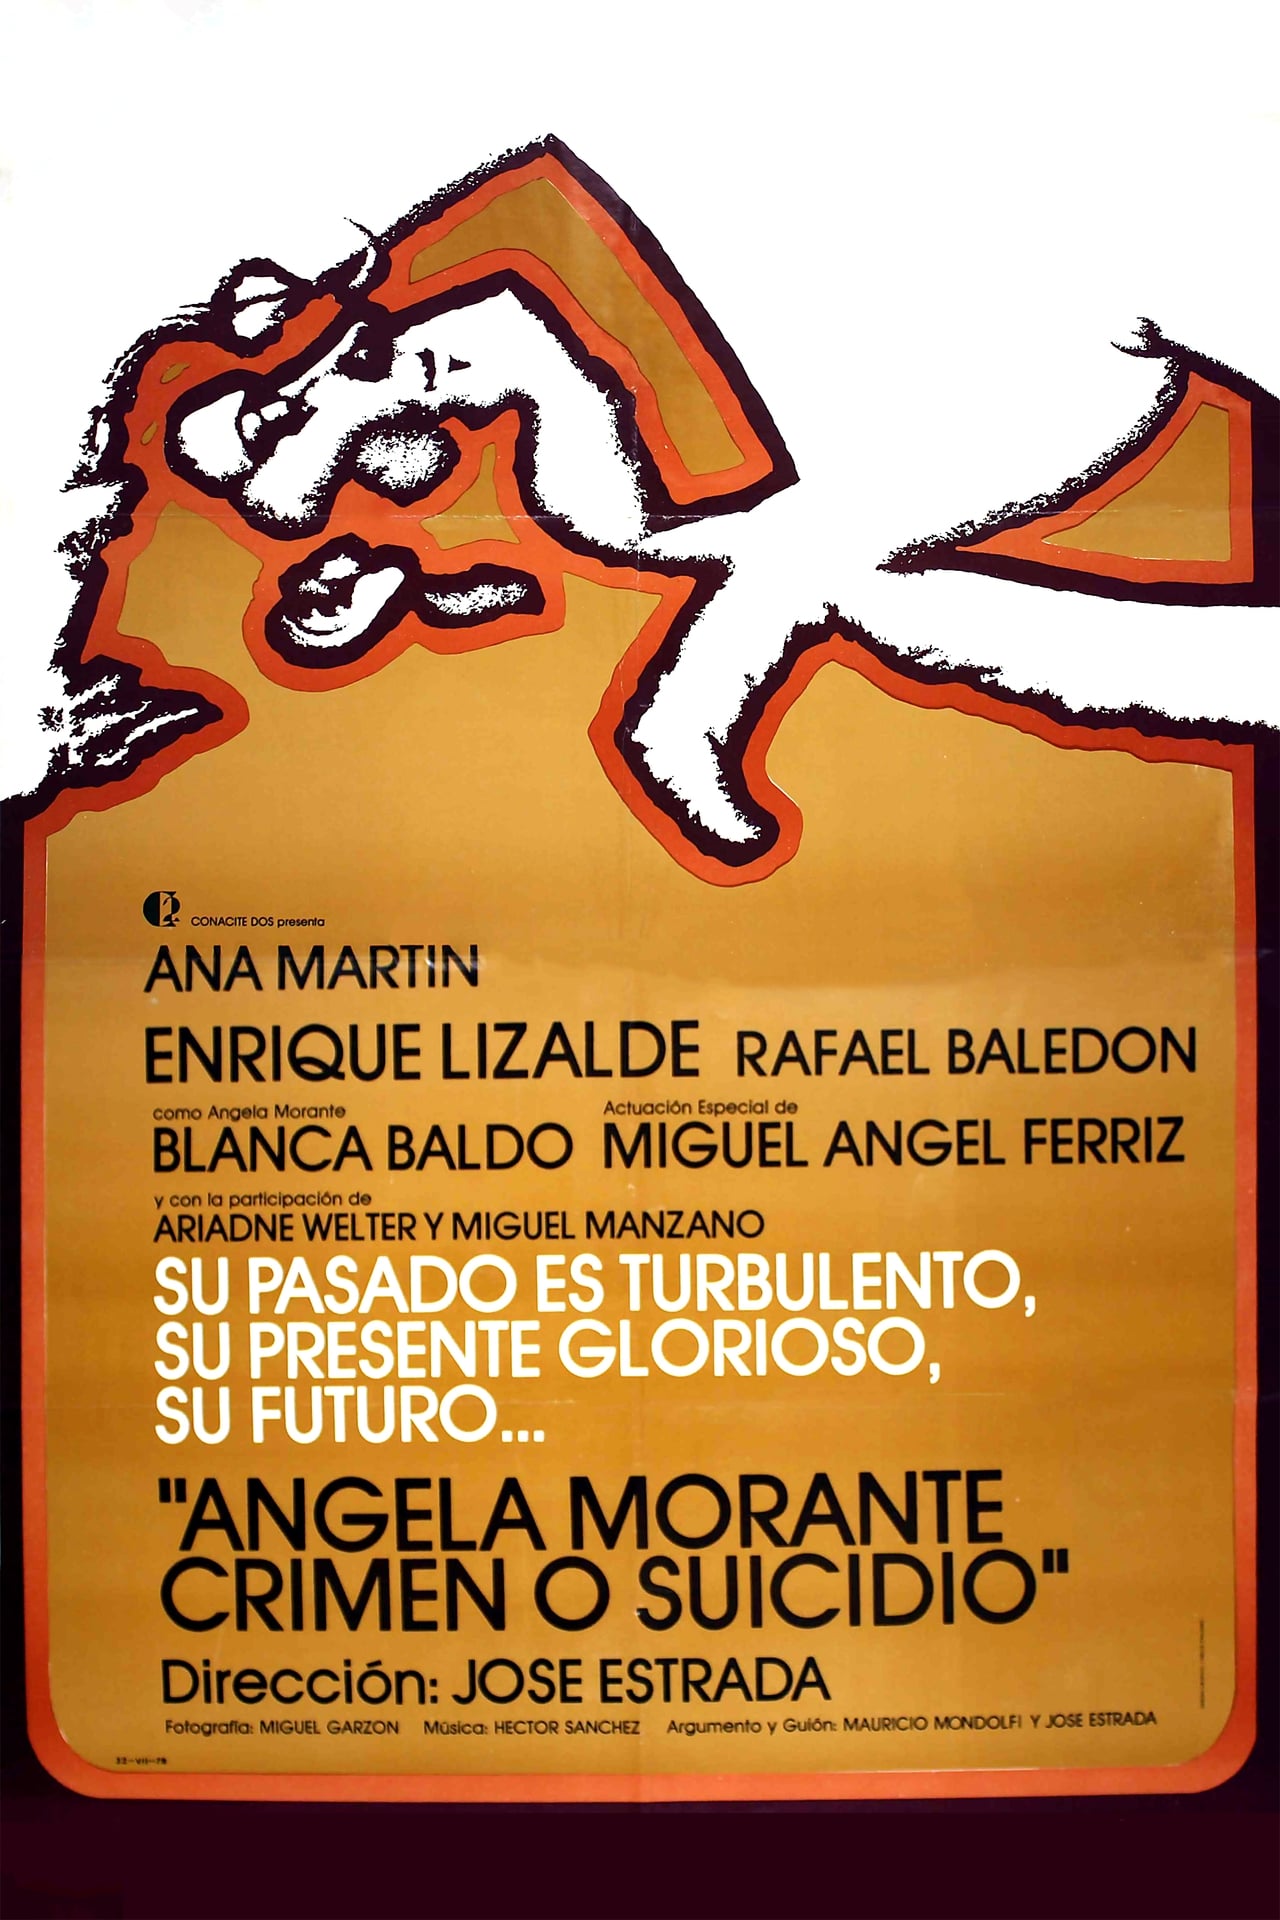 Ángela Morante, ¿crimen o suicidio? (1981) Screenshot 1